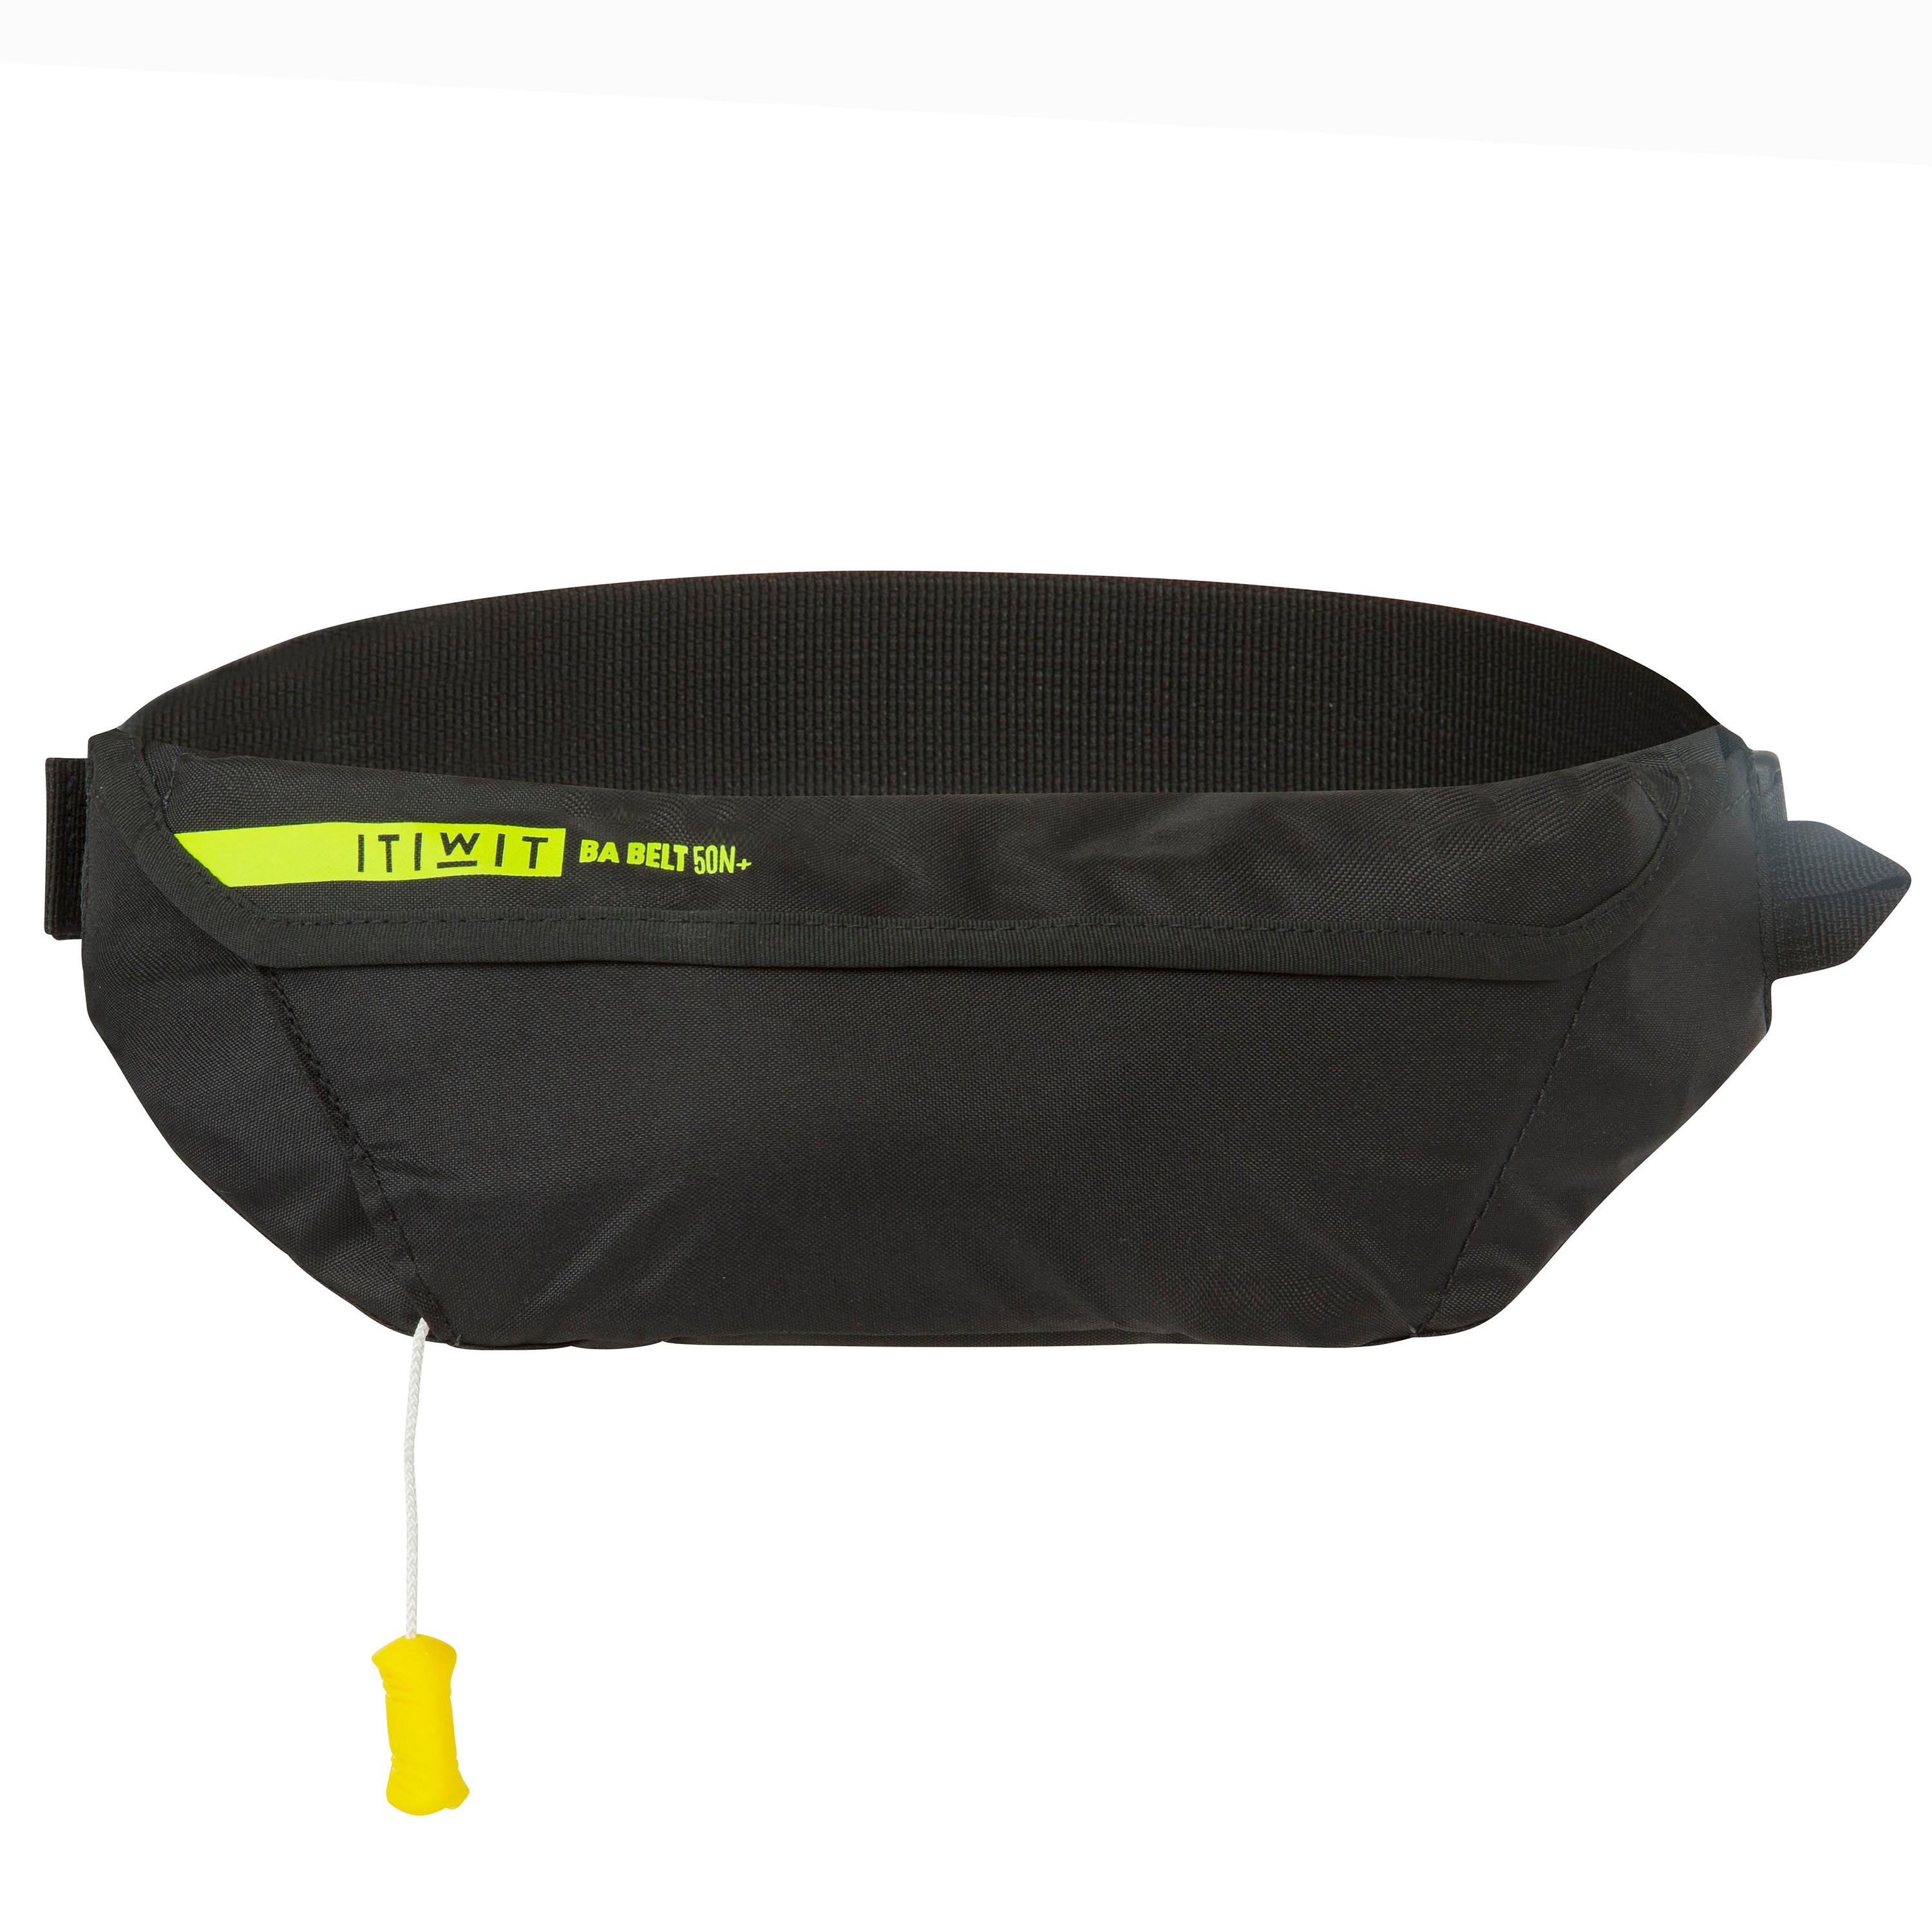 Adult inflatable buoyancy aid belt - BA 50N+ EIF PFD 5/13